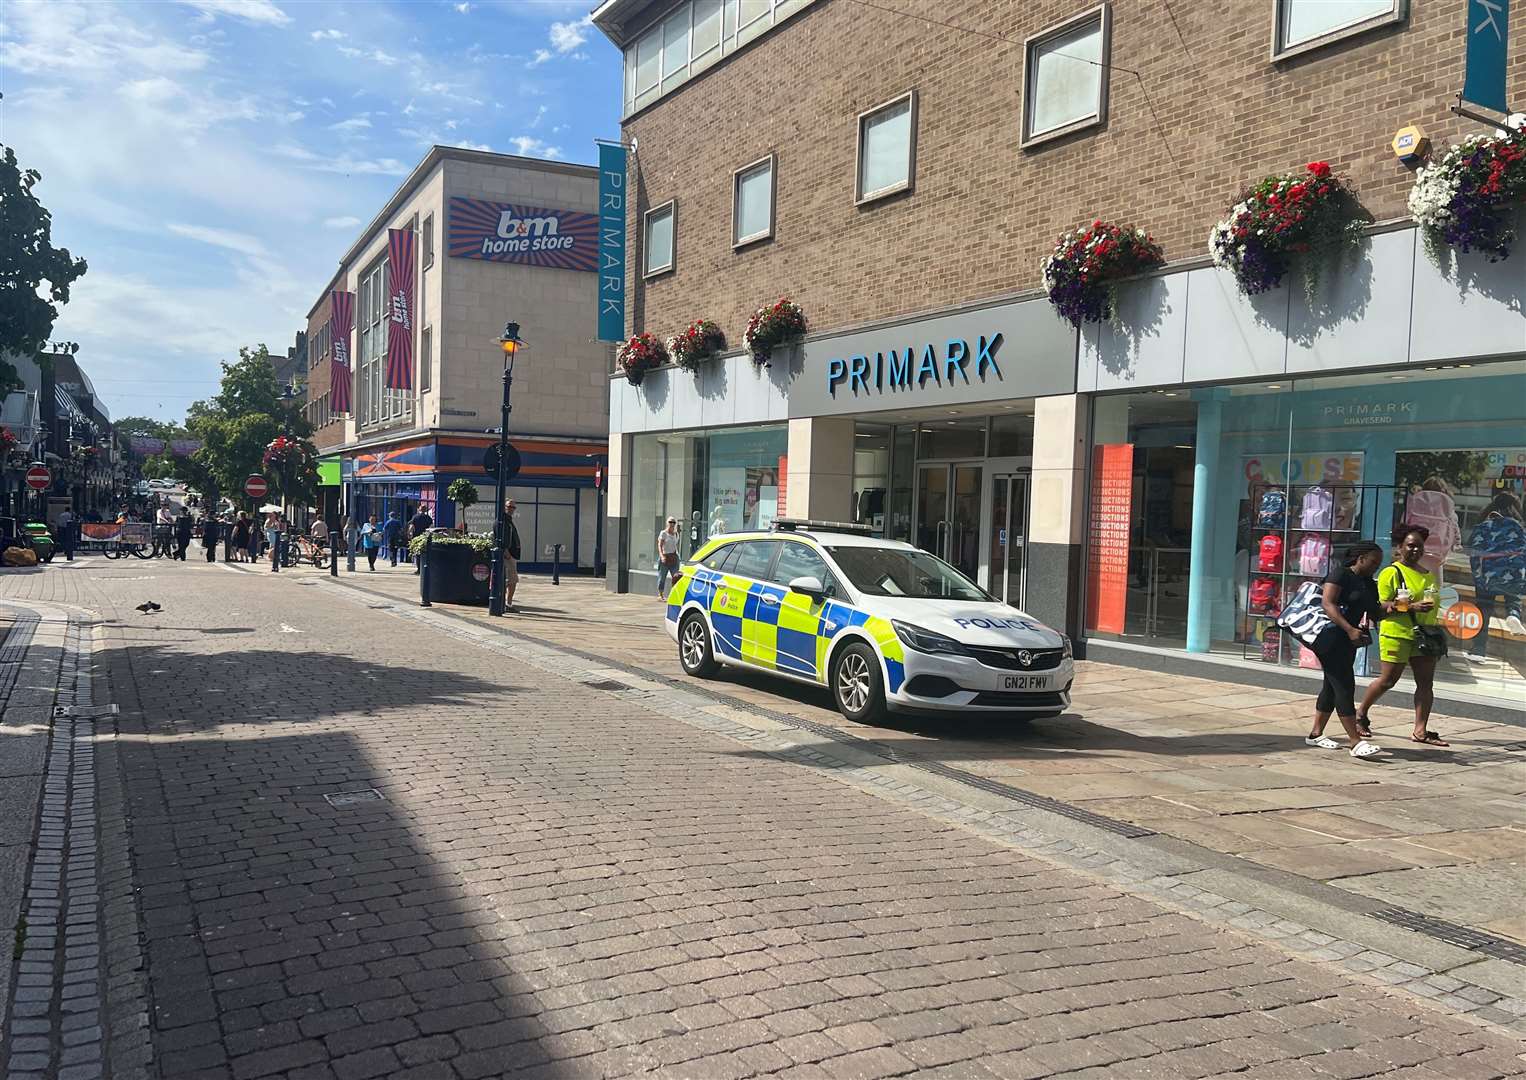 Police in New Road, Gravesend, outside Primark